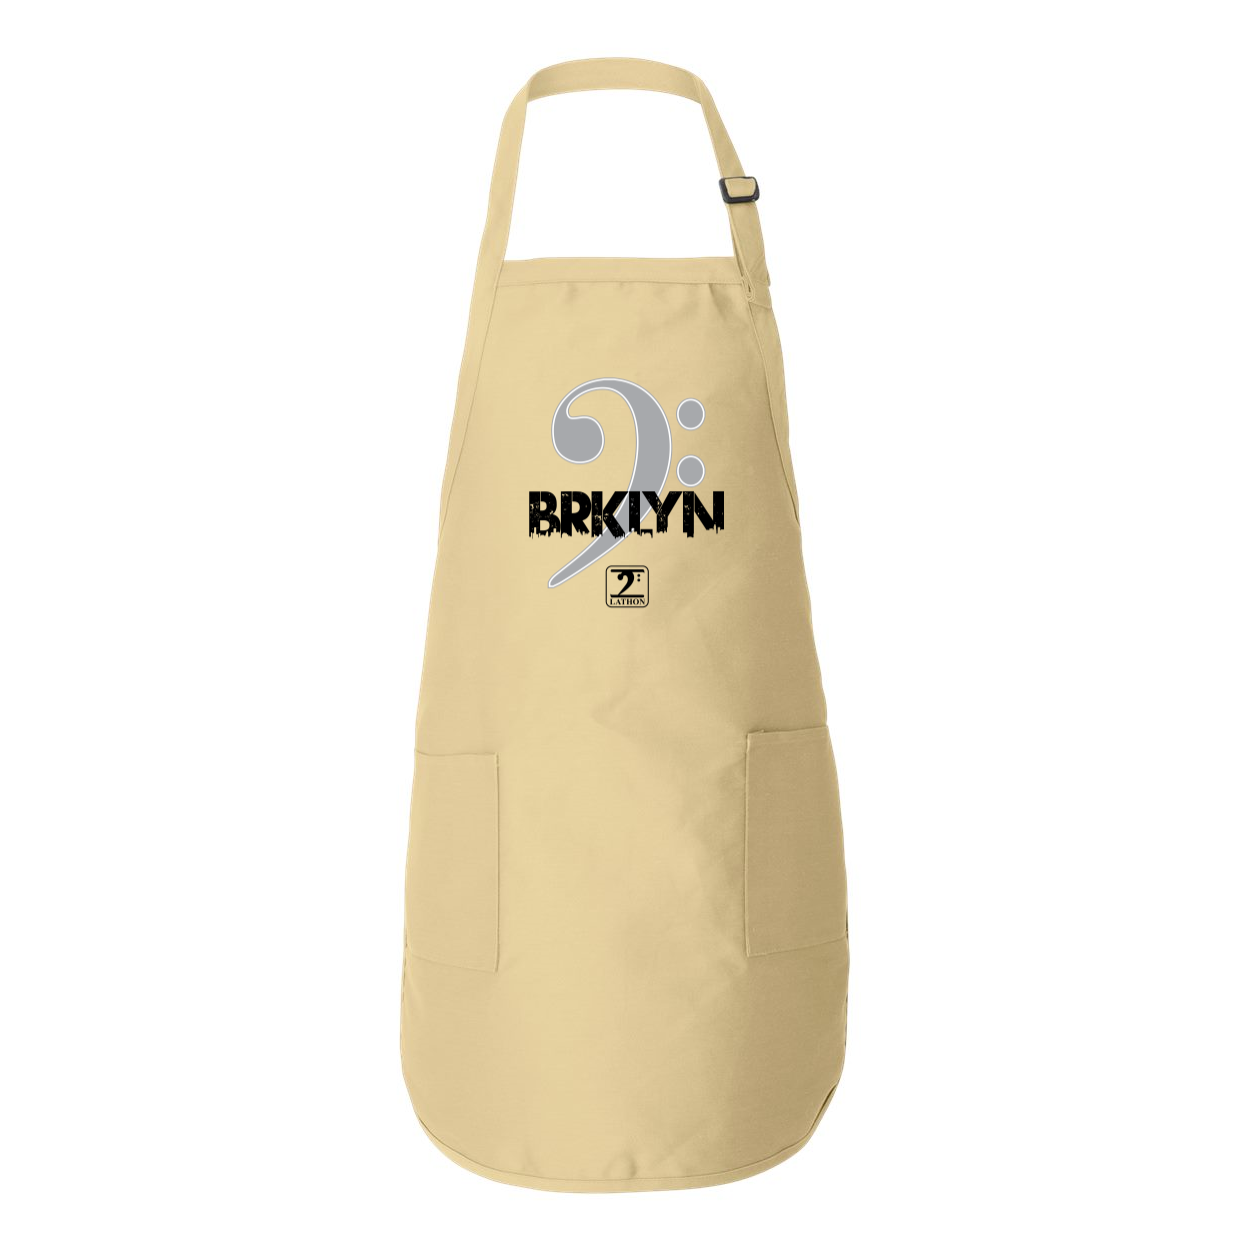 BROOKLYN CLEF Full-Length Apron with Pockets - Lathon Bass Wear